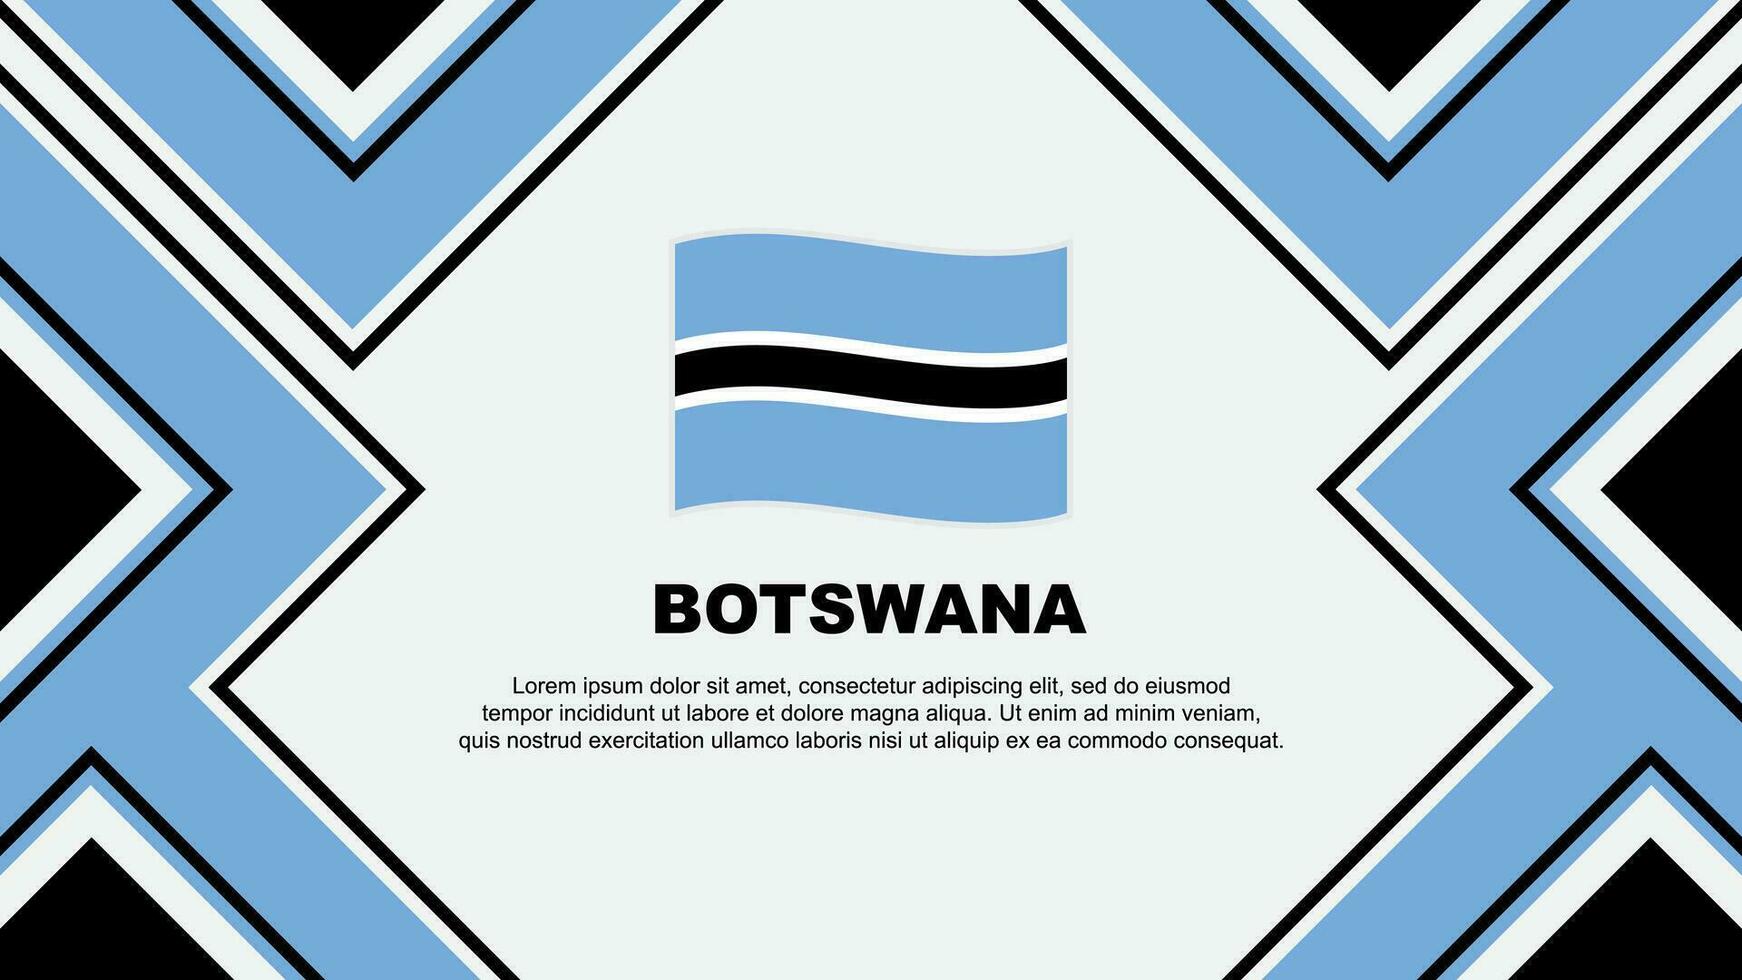 Botswana Flag Abstract Background Design Template. Botswana Independence Day Banner Wallpaper Vector Illustration. Botswana Vector